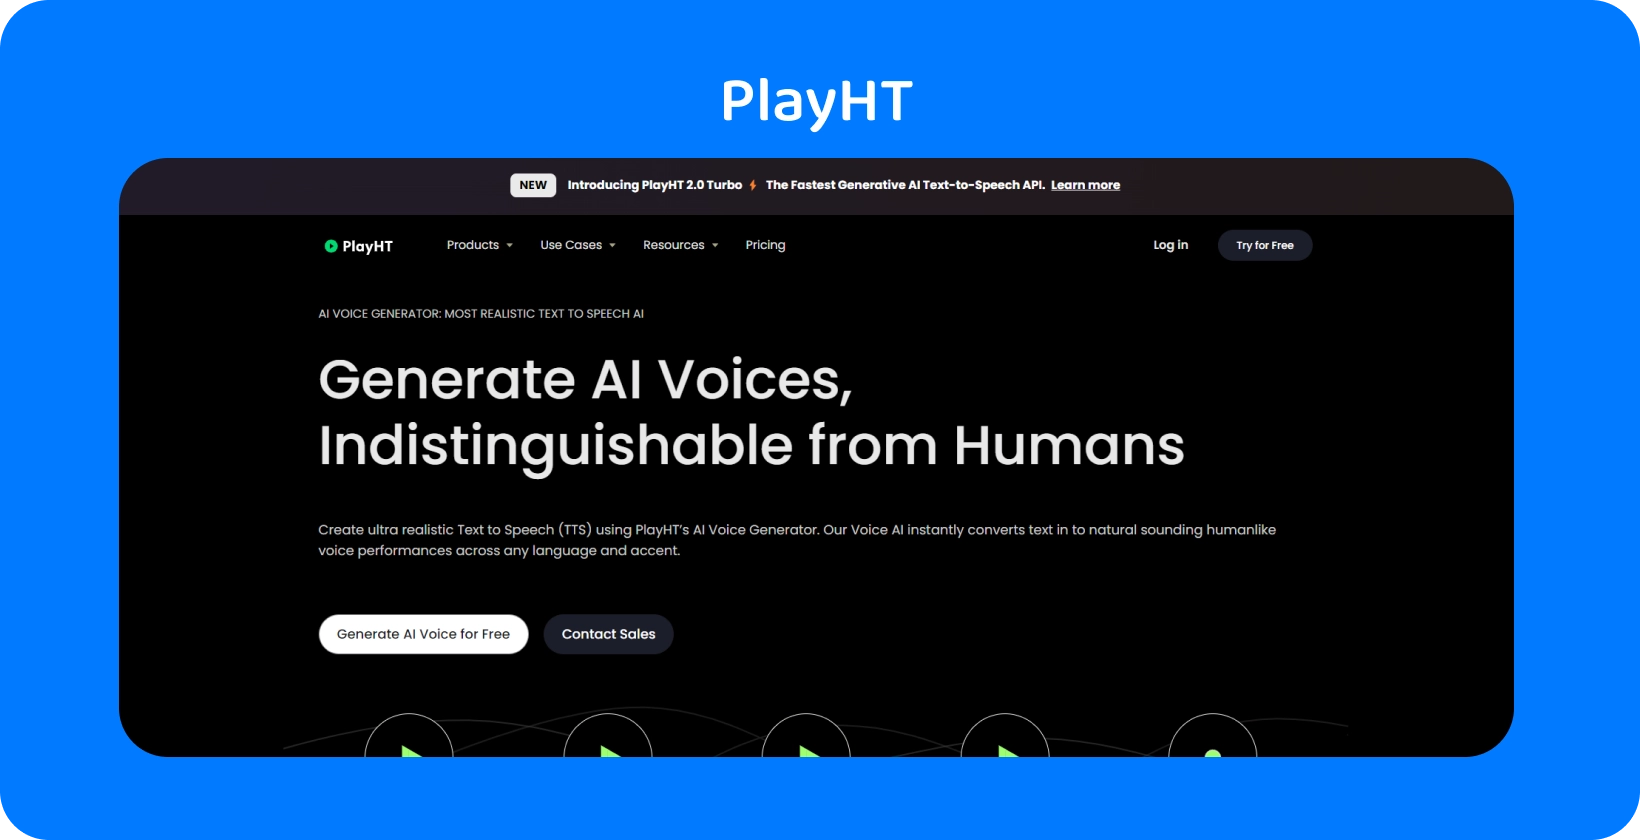 PlayHT מציעה קולות שנוצרו על ידי AI כמעט בלתי ניתנים להבחנה מדיבור אנושי לצרכי טקסט לדיבור.